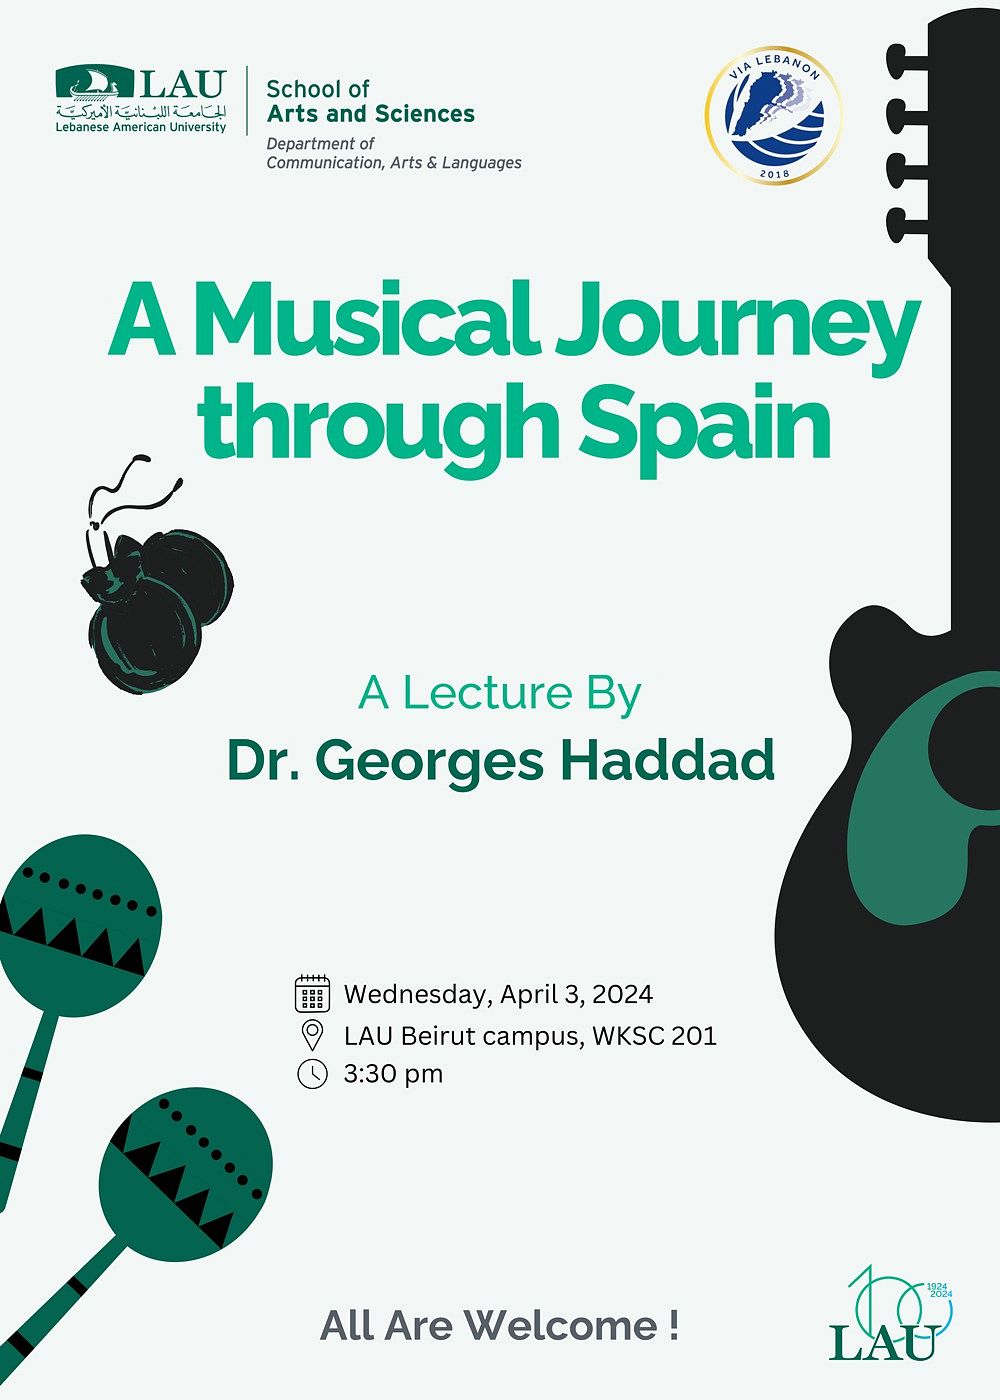 A MUSICAL JOURNEY THROUGH SPAIN, DR. GEORGES HADDAD thumbnail